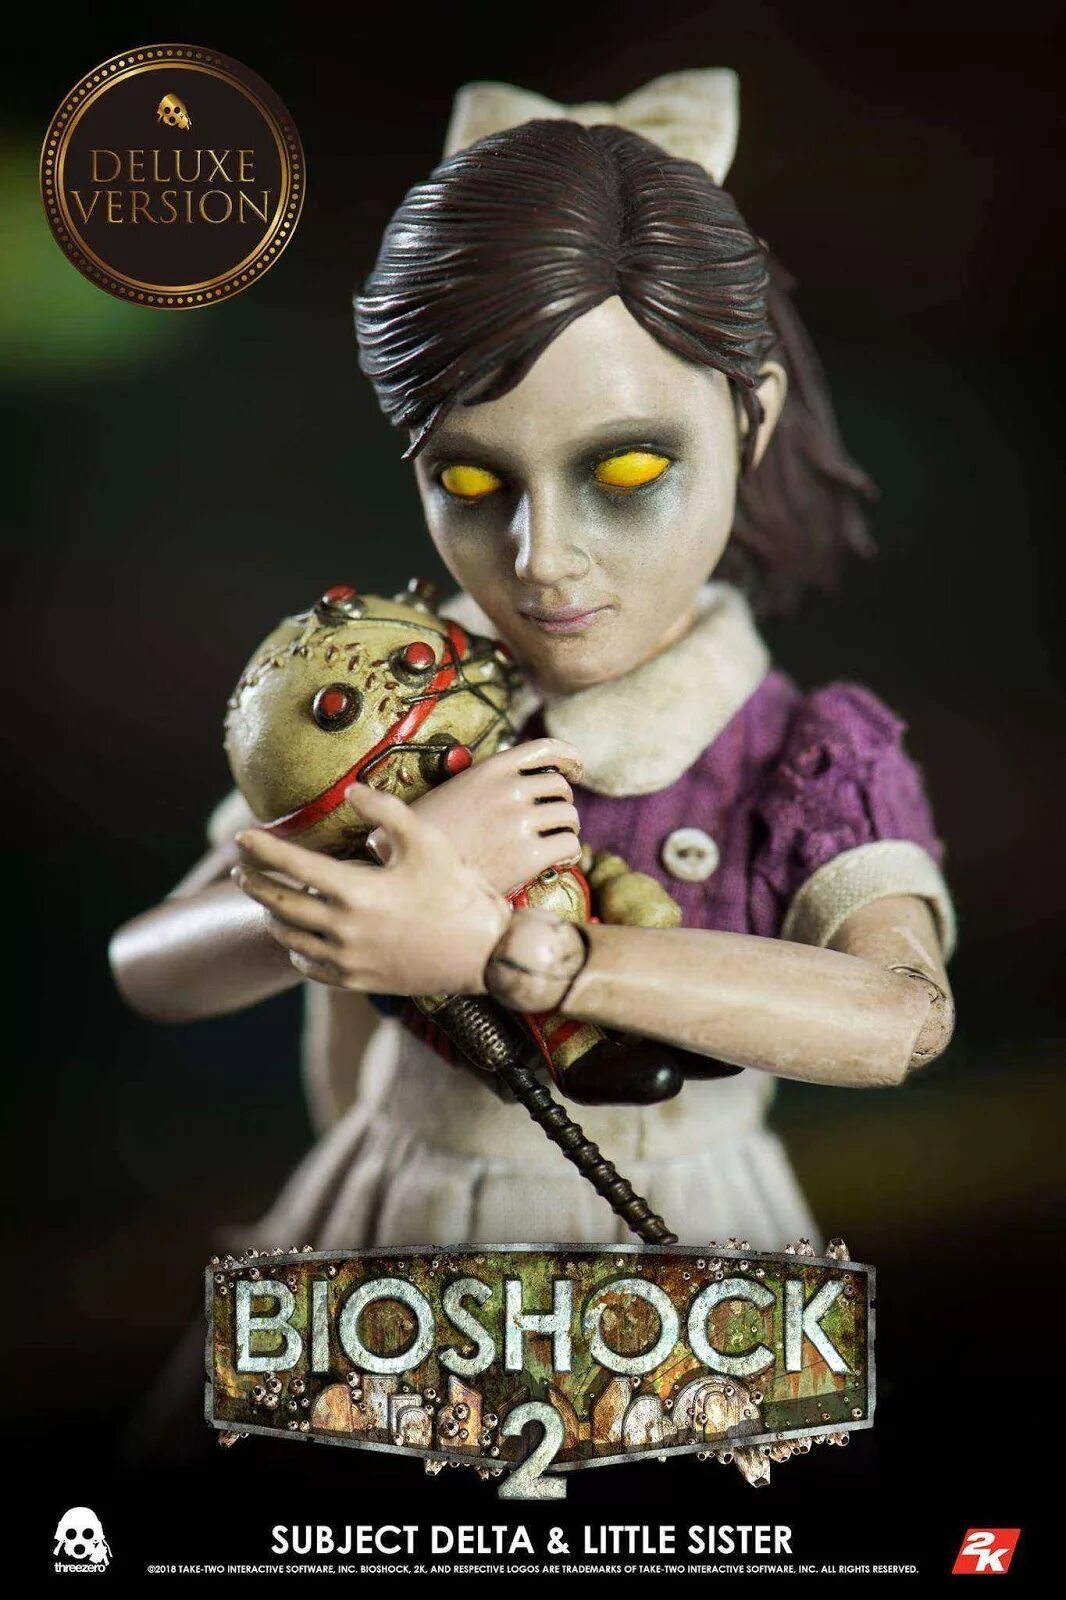 Little sister game. Маленькая сестричка Bioshock. THREEZERO Bioshock 1/6 subject Delta. Subject Delta Bioshock 2. Биошок маленькие сестрички.